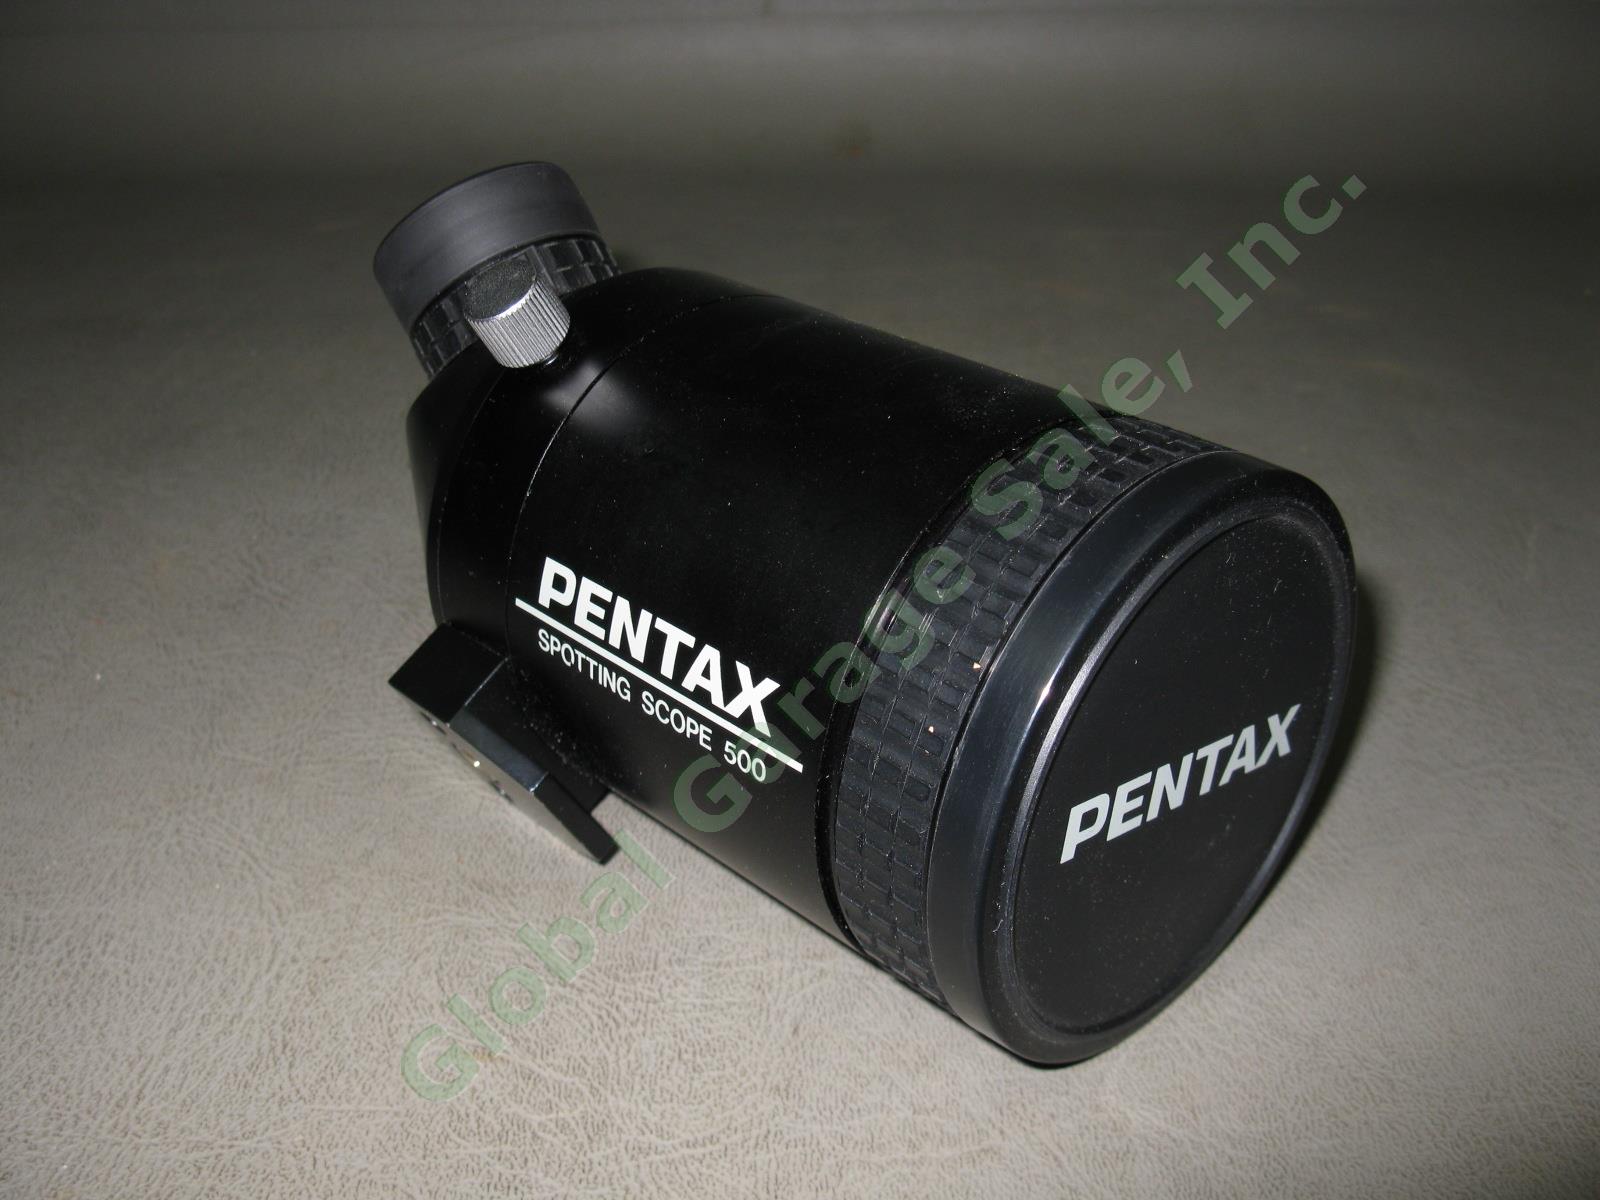 Pentax 500mm Angled Spotting Scope Telephoto Lens W/ Hood Cap Pouch Bag Bundle + 2